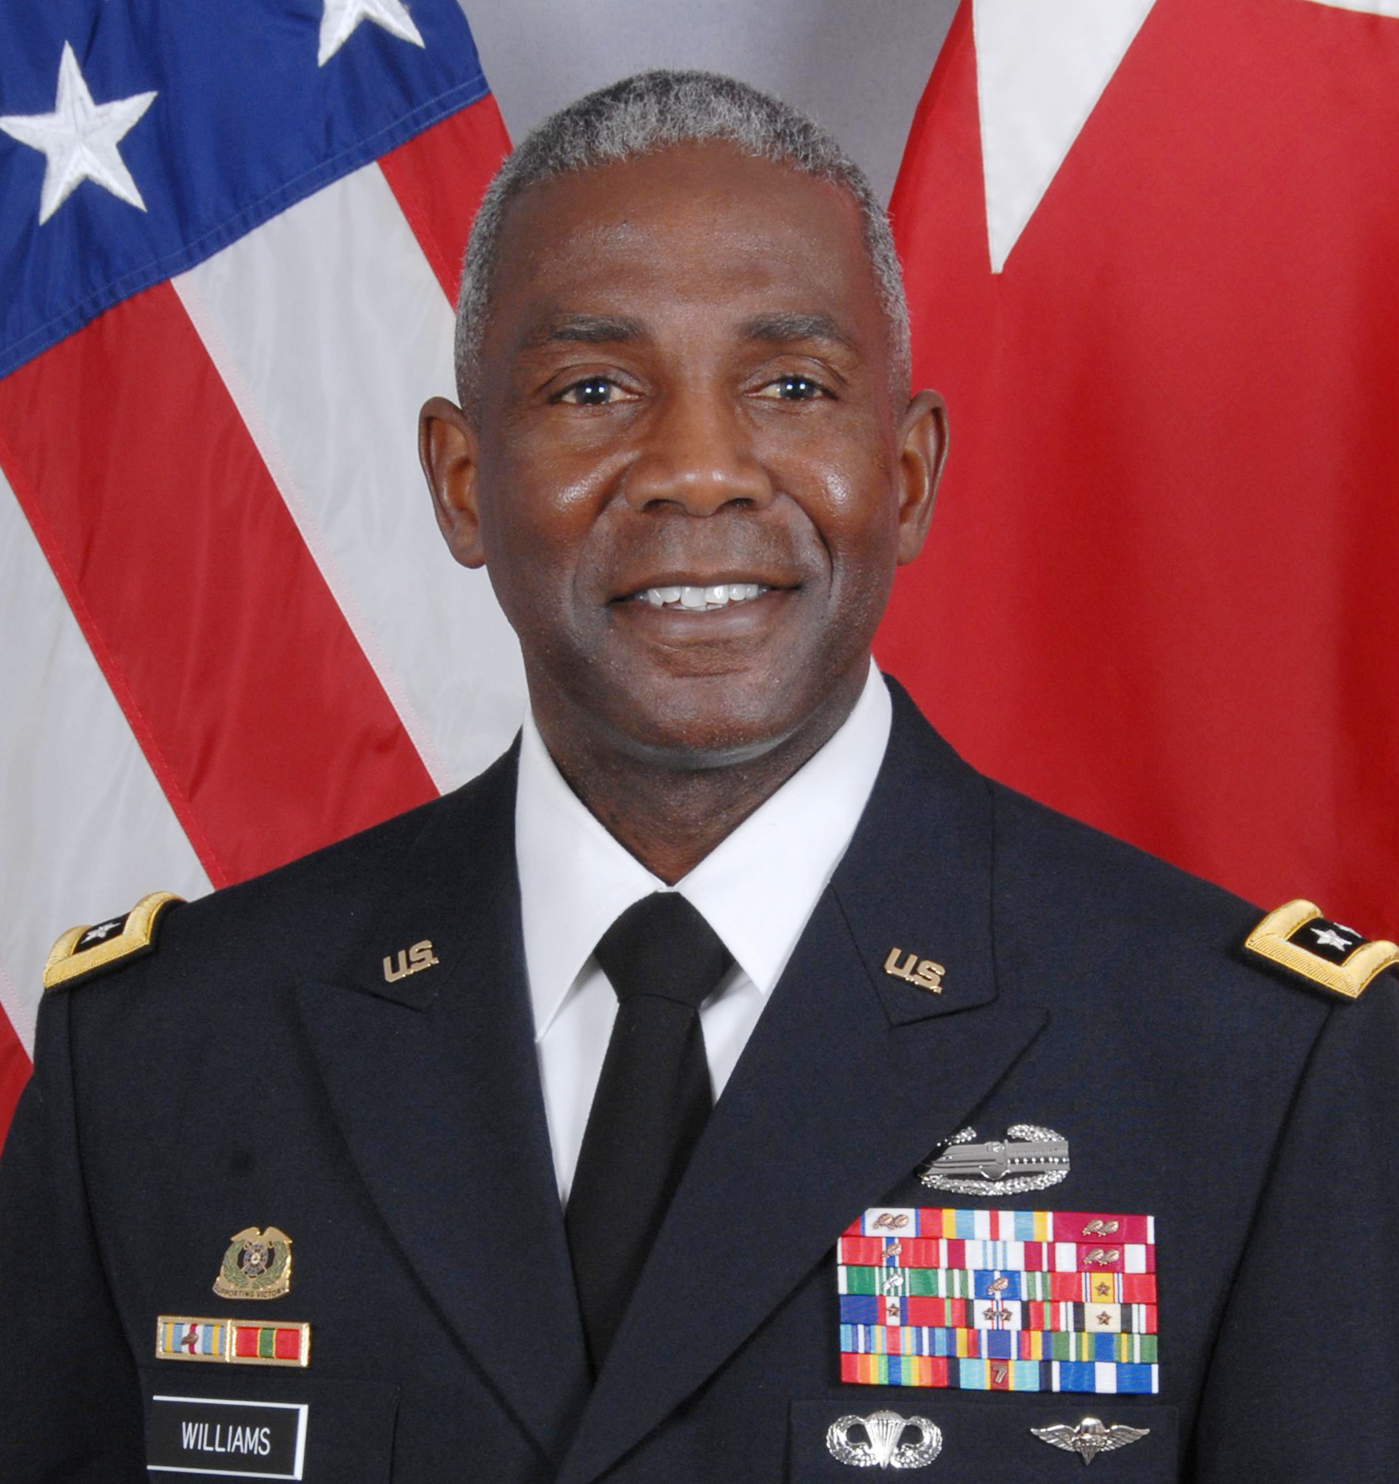 Lieutenant General<br>Darrell K. Williams (Ret.)